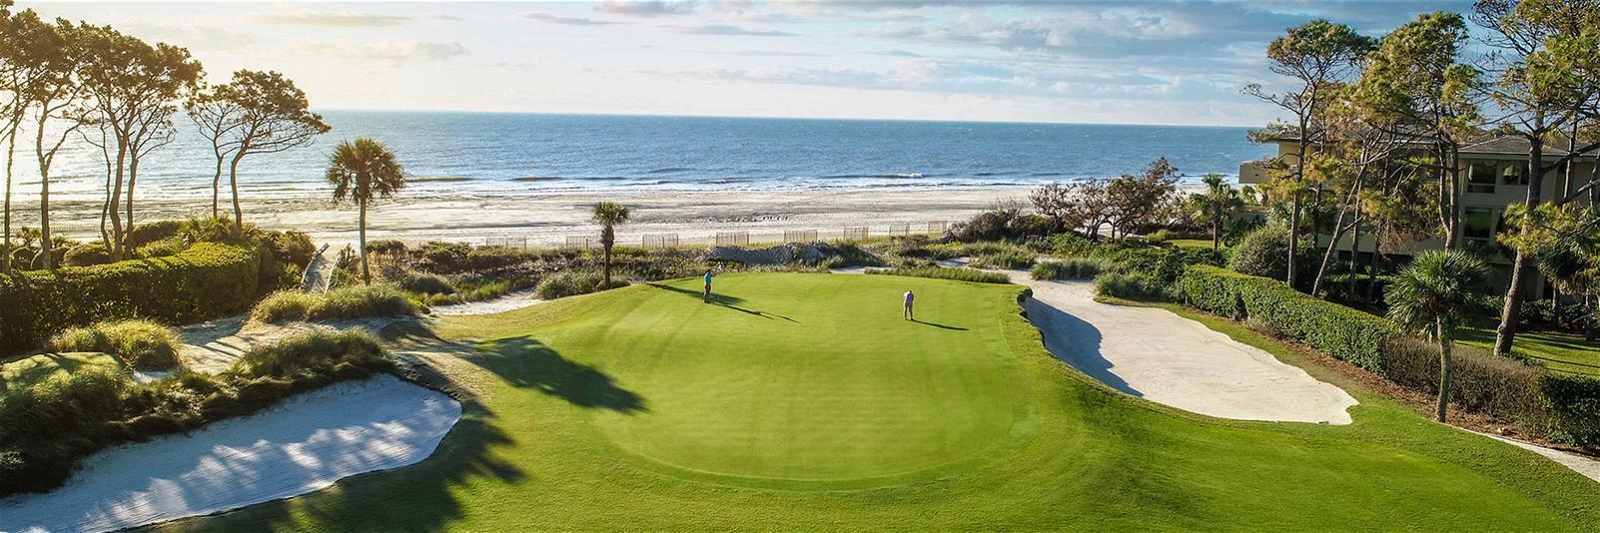 Golf Vacation Package - Atlantic Dunes at Sea Pines Resort